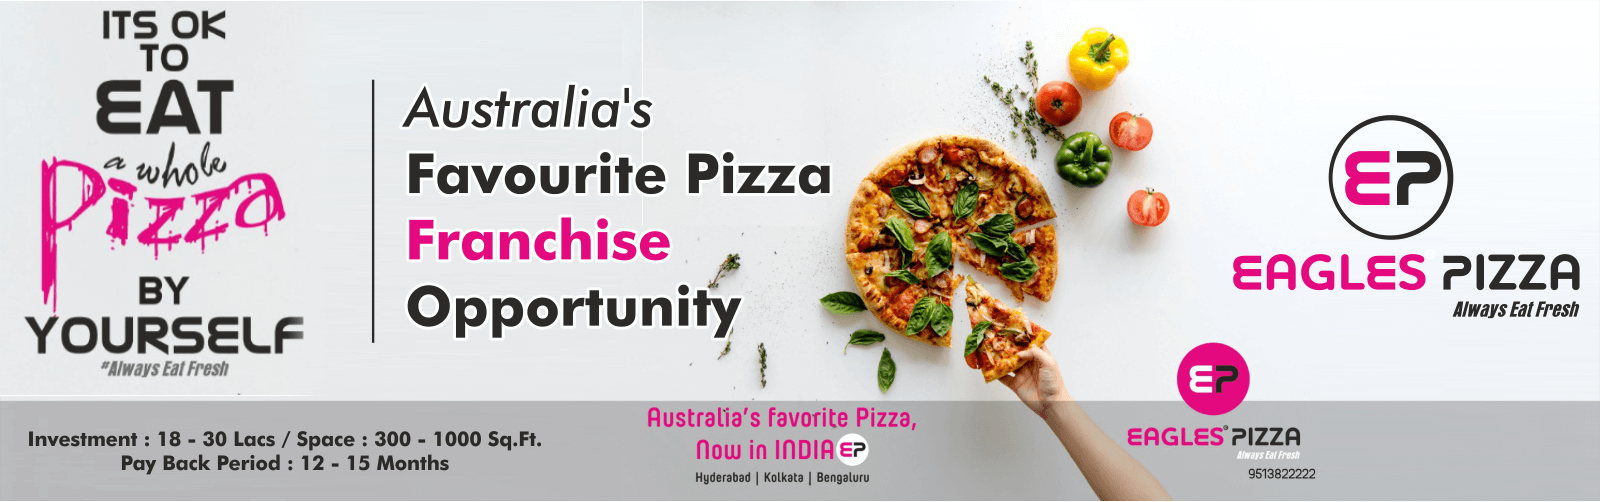 admin/uploads/brand_registration/Eagles Pizza (Australia's Favourite Pizza Franchise Opportunity)